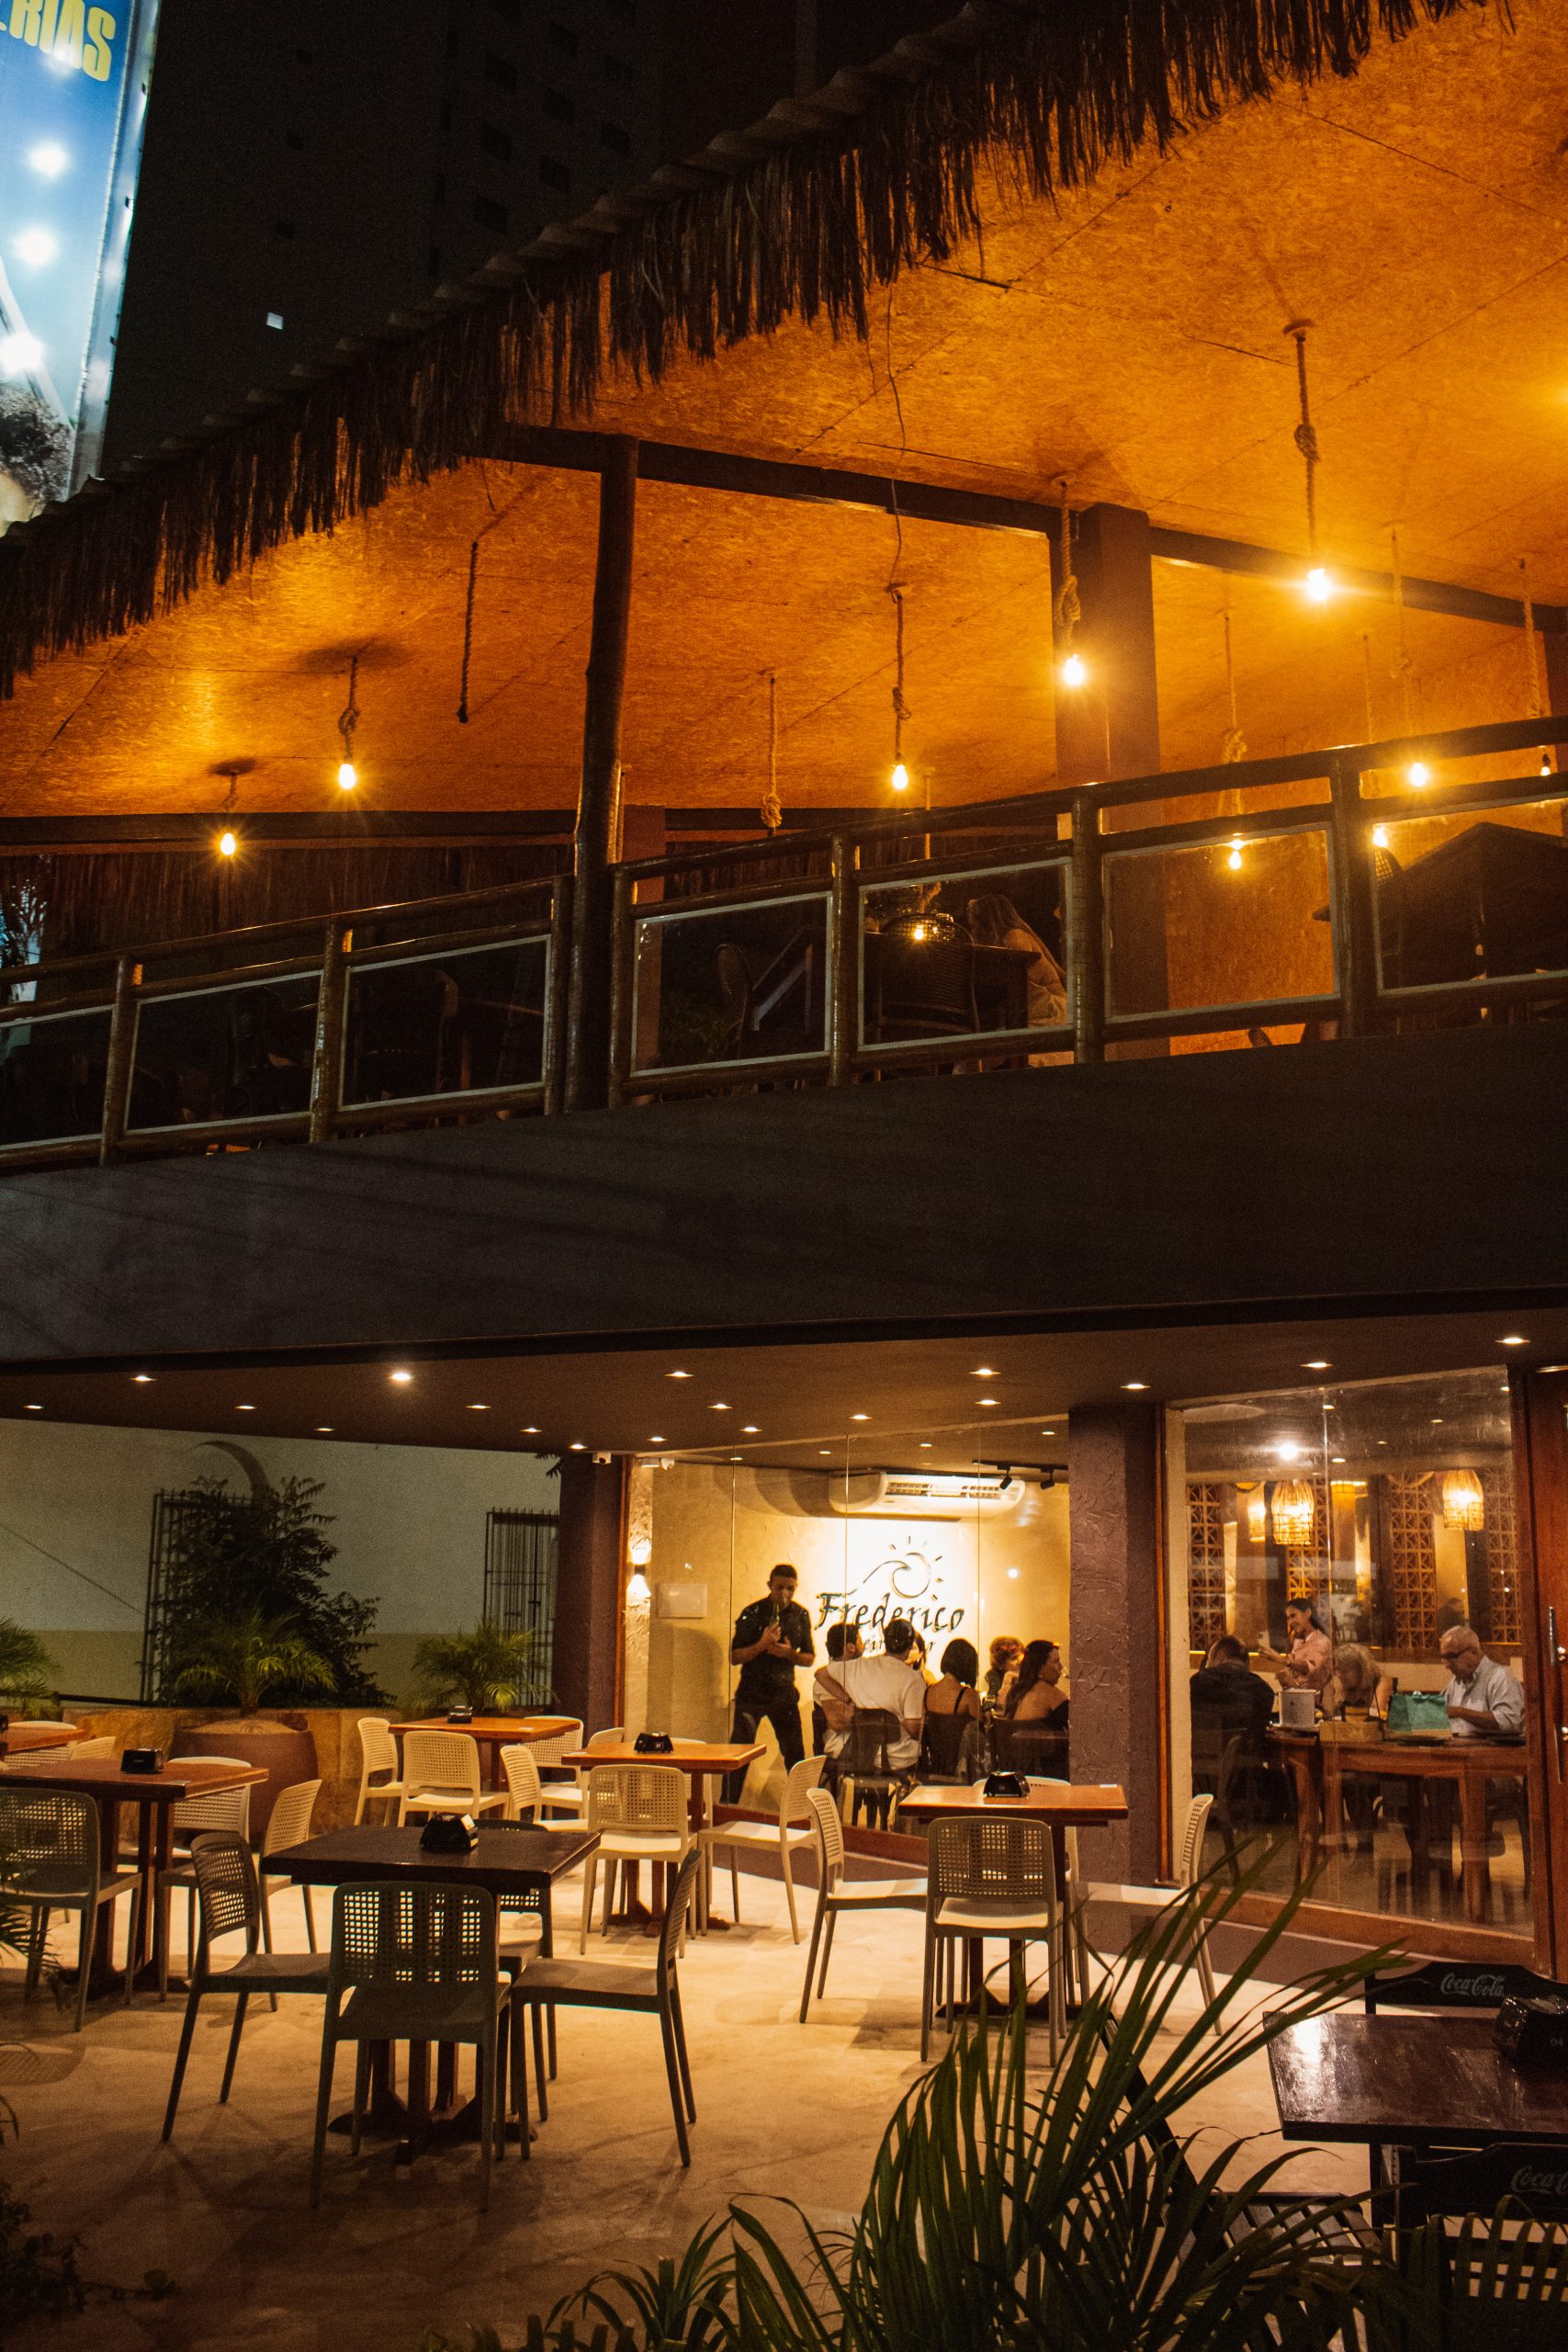 Restaurante Frederico Beira Mar: novo destino gastronômico chega à Beira Mar de Fortaleza